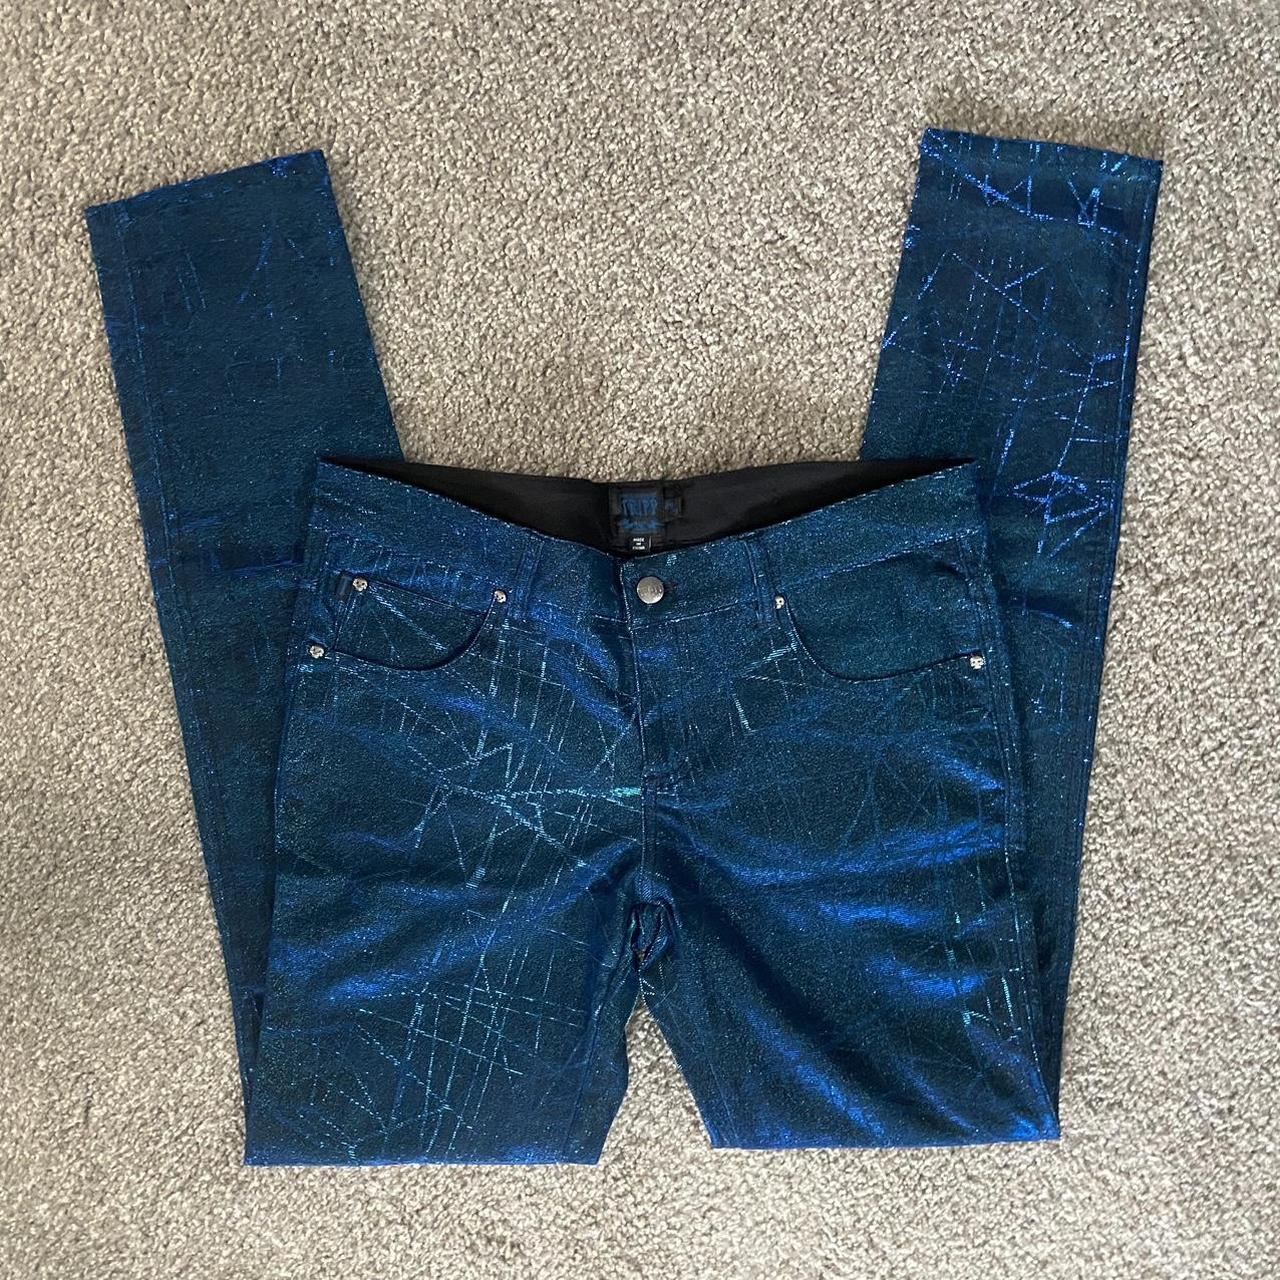 Tripp NYC blue sparkle holographic jeans Textured... - Depop